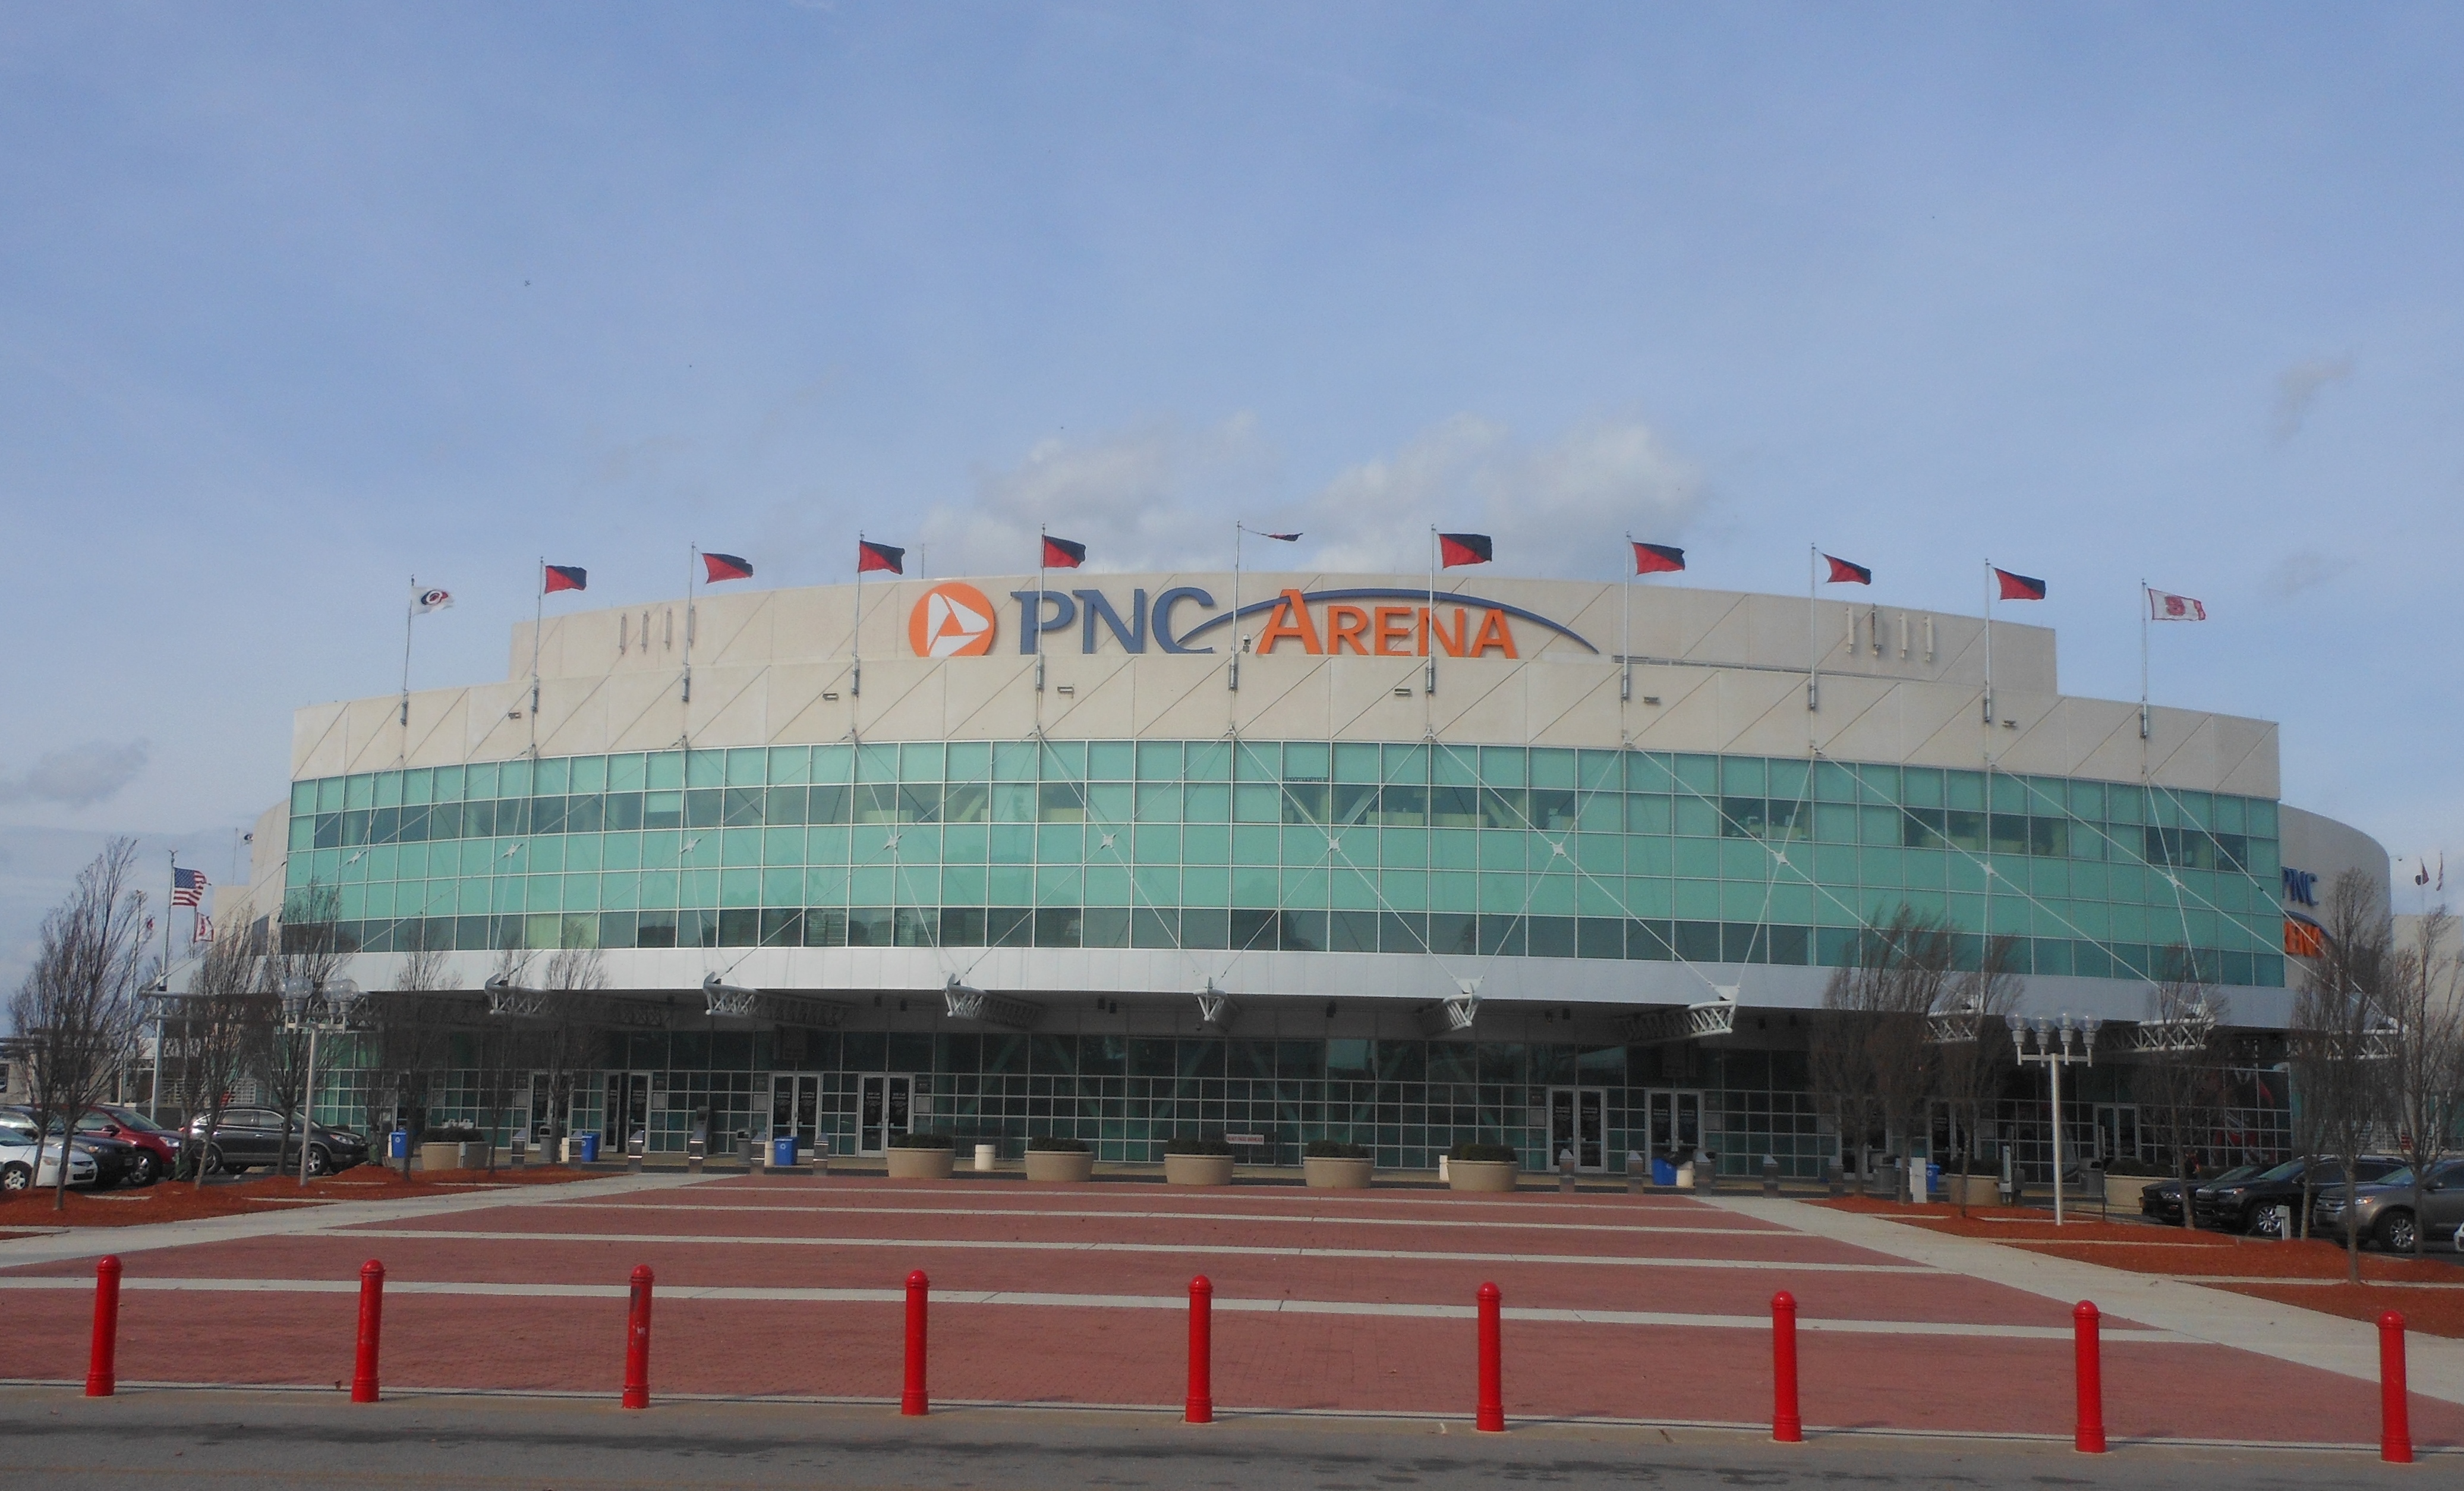 PNC Arena, home of the Carolina Hurricanes